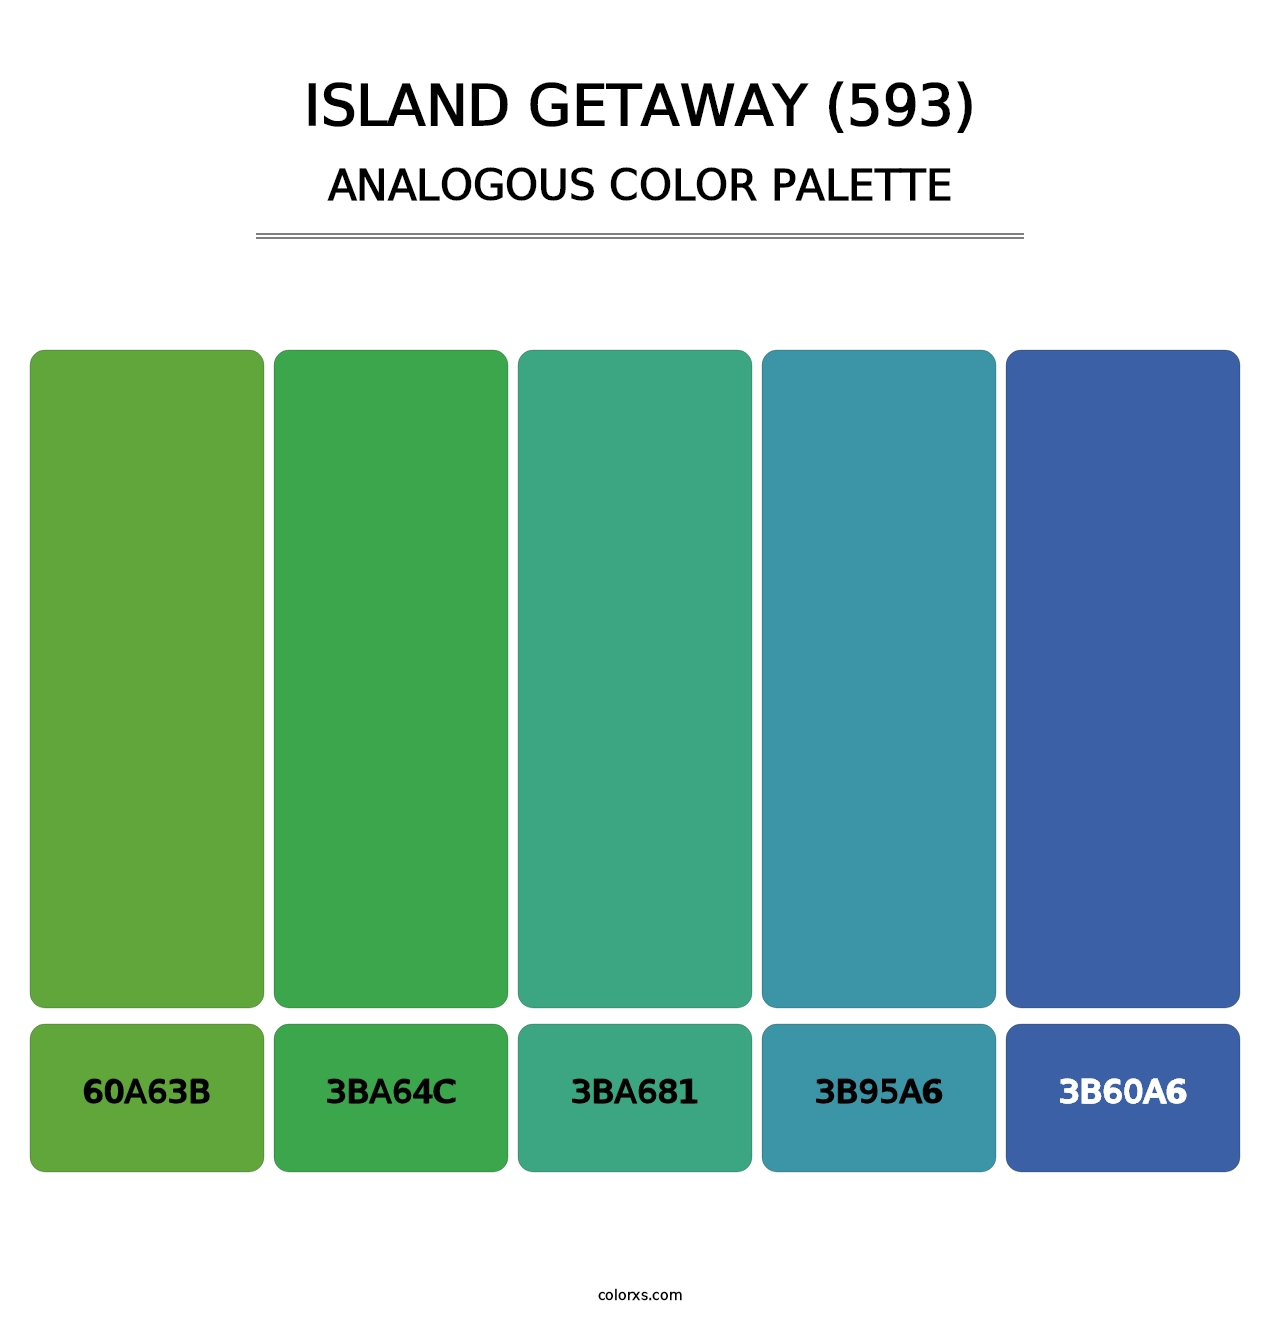 Island Getaway (593) - Analogous Color Palette